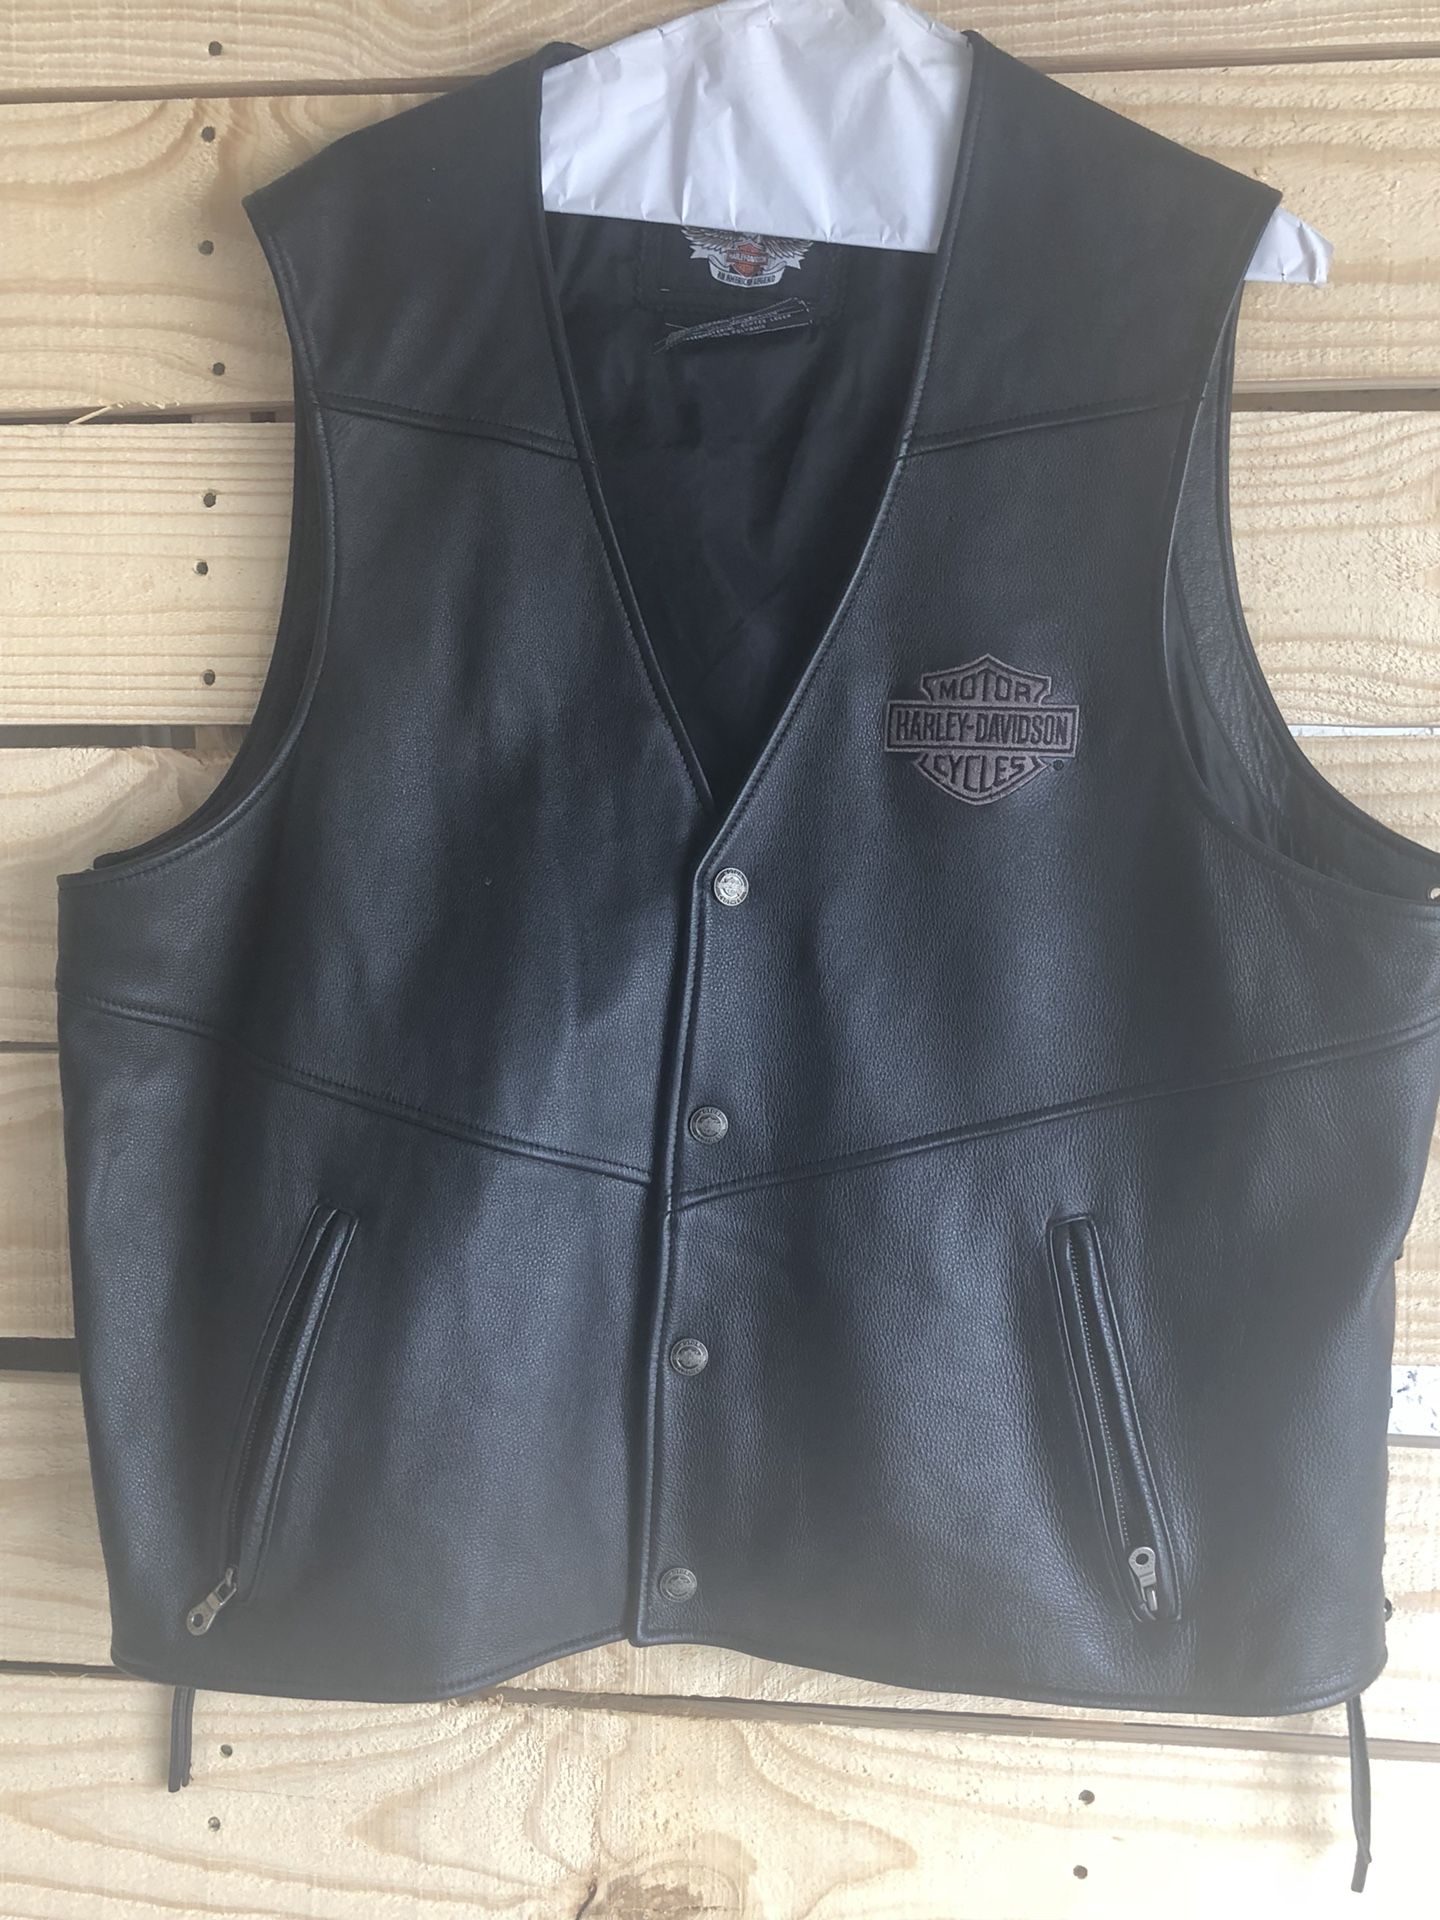 Harley-Davidson - vest, Genuine leather 2XL